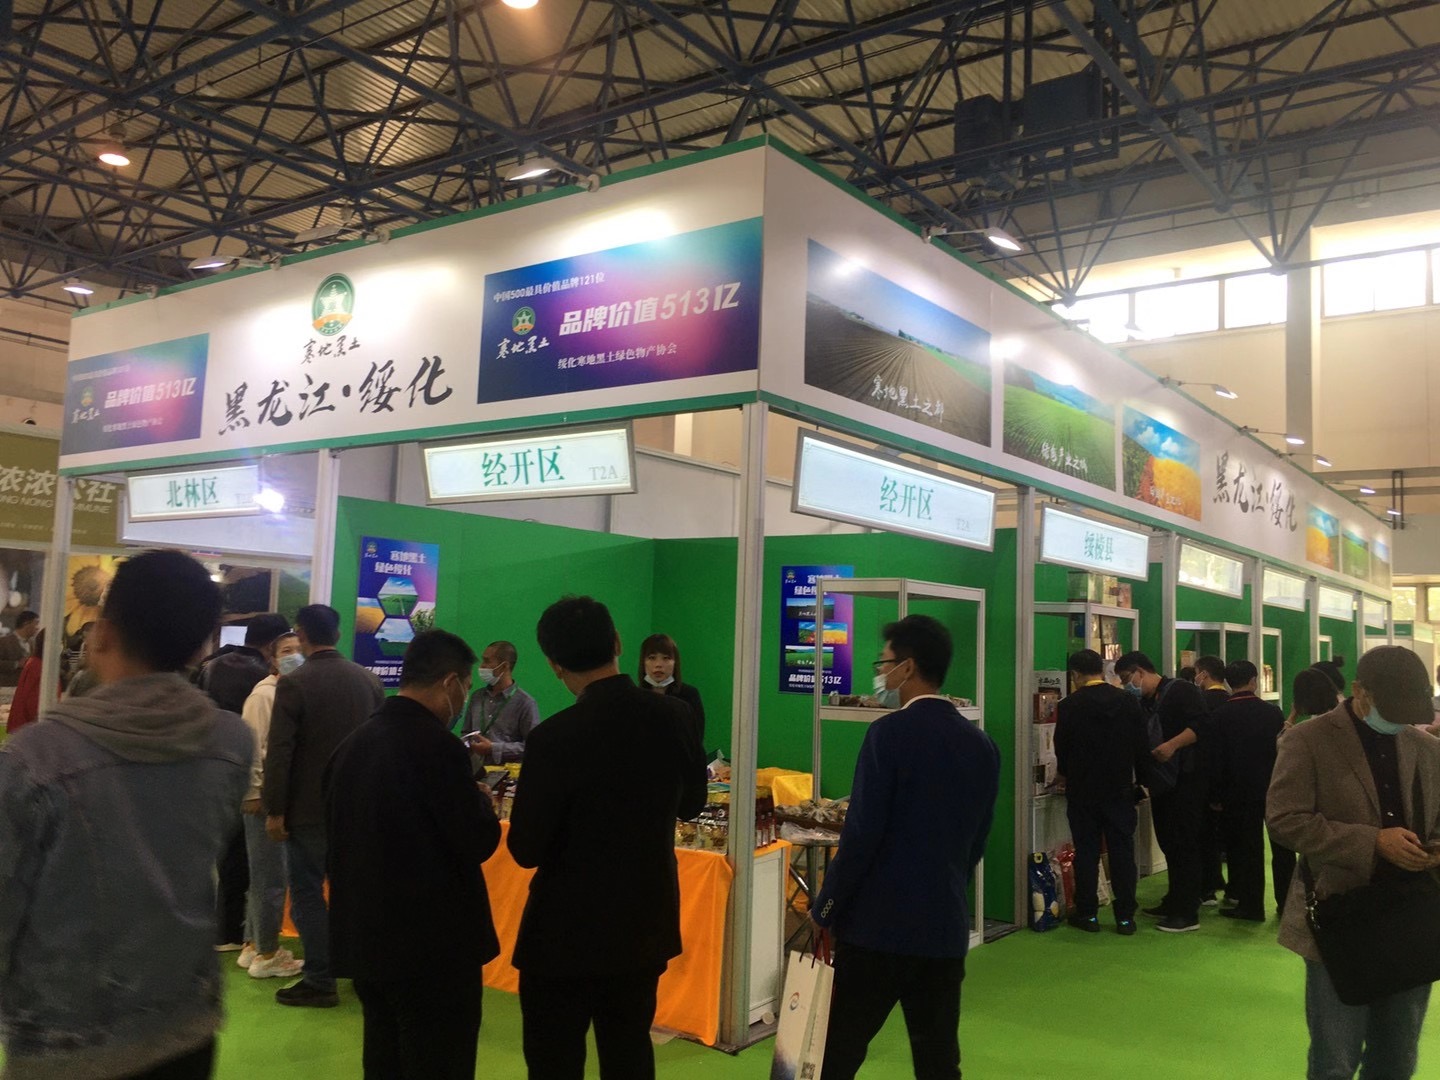 AIFE2021亚洲(北京)国际食品饮料博览会暨进口食品展